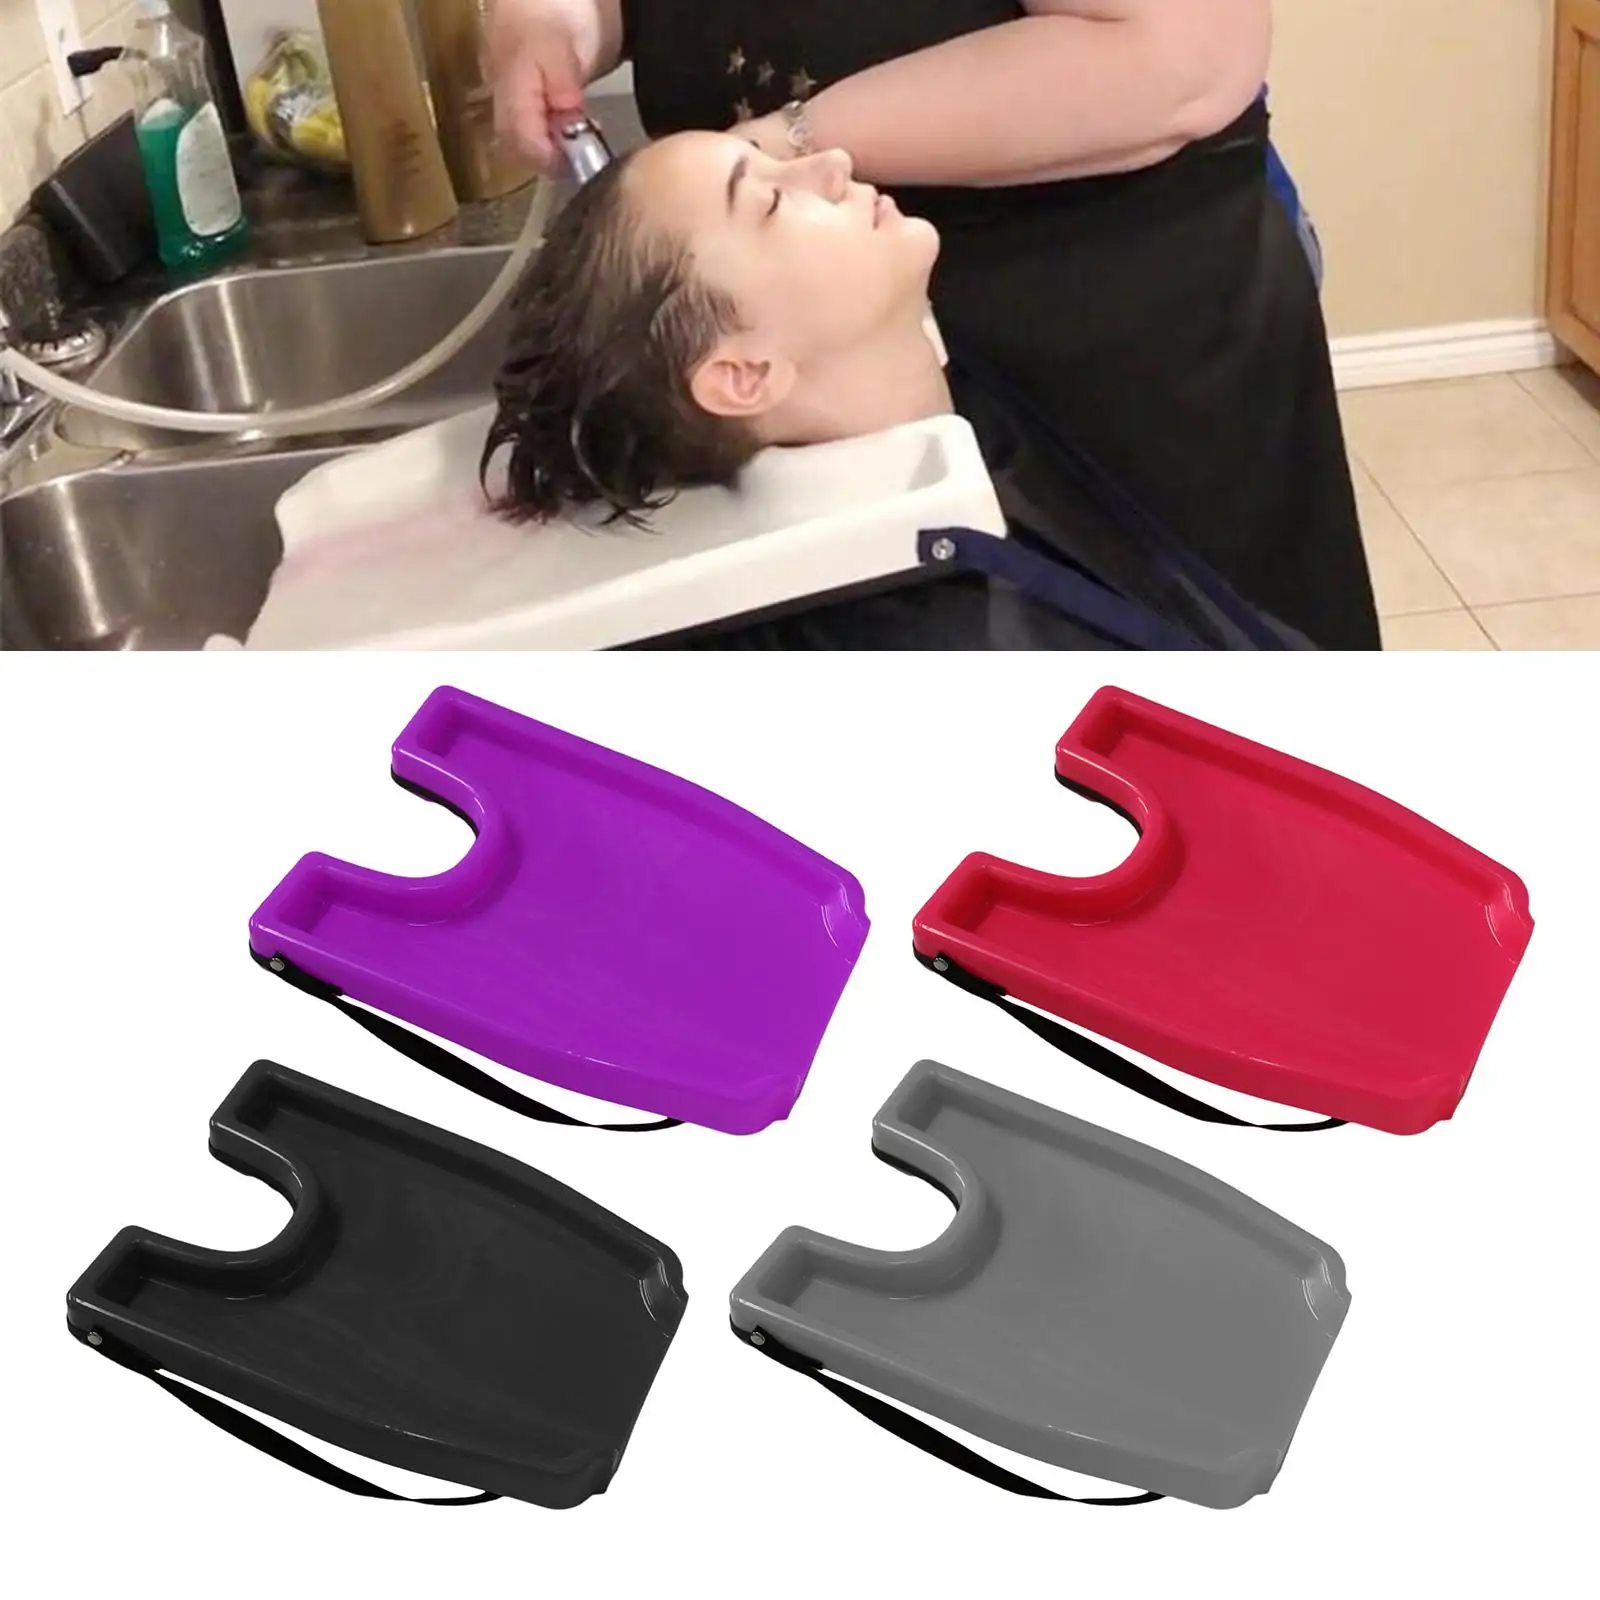 

Portable Shampoo Tray Washing Bowl Hair Wash Sink Basin Neck Rest Salon Home Medical Hairdressing Hair Care Tool Plastic